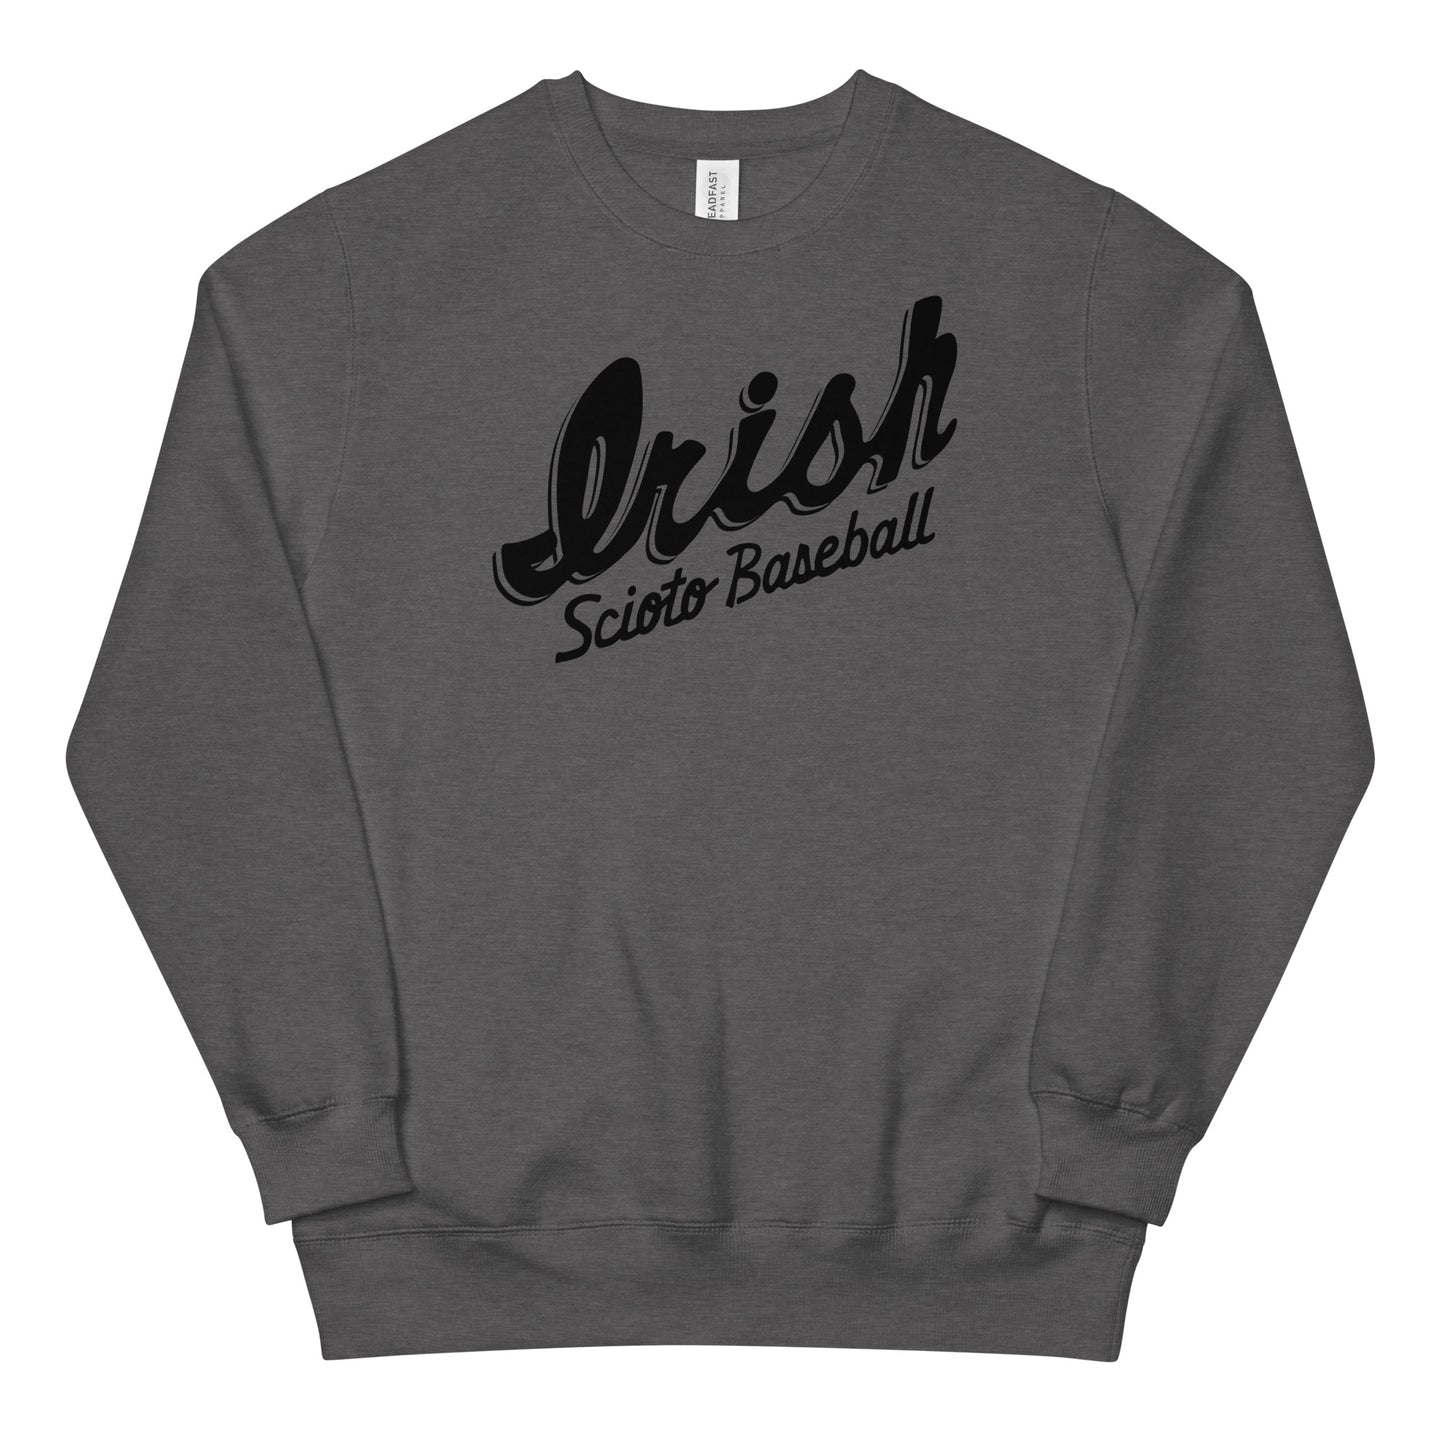 IRISH_script_SCIOTO BASEBALL-Unisex fashion sweatshirt